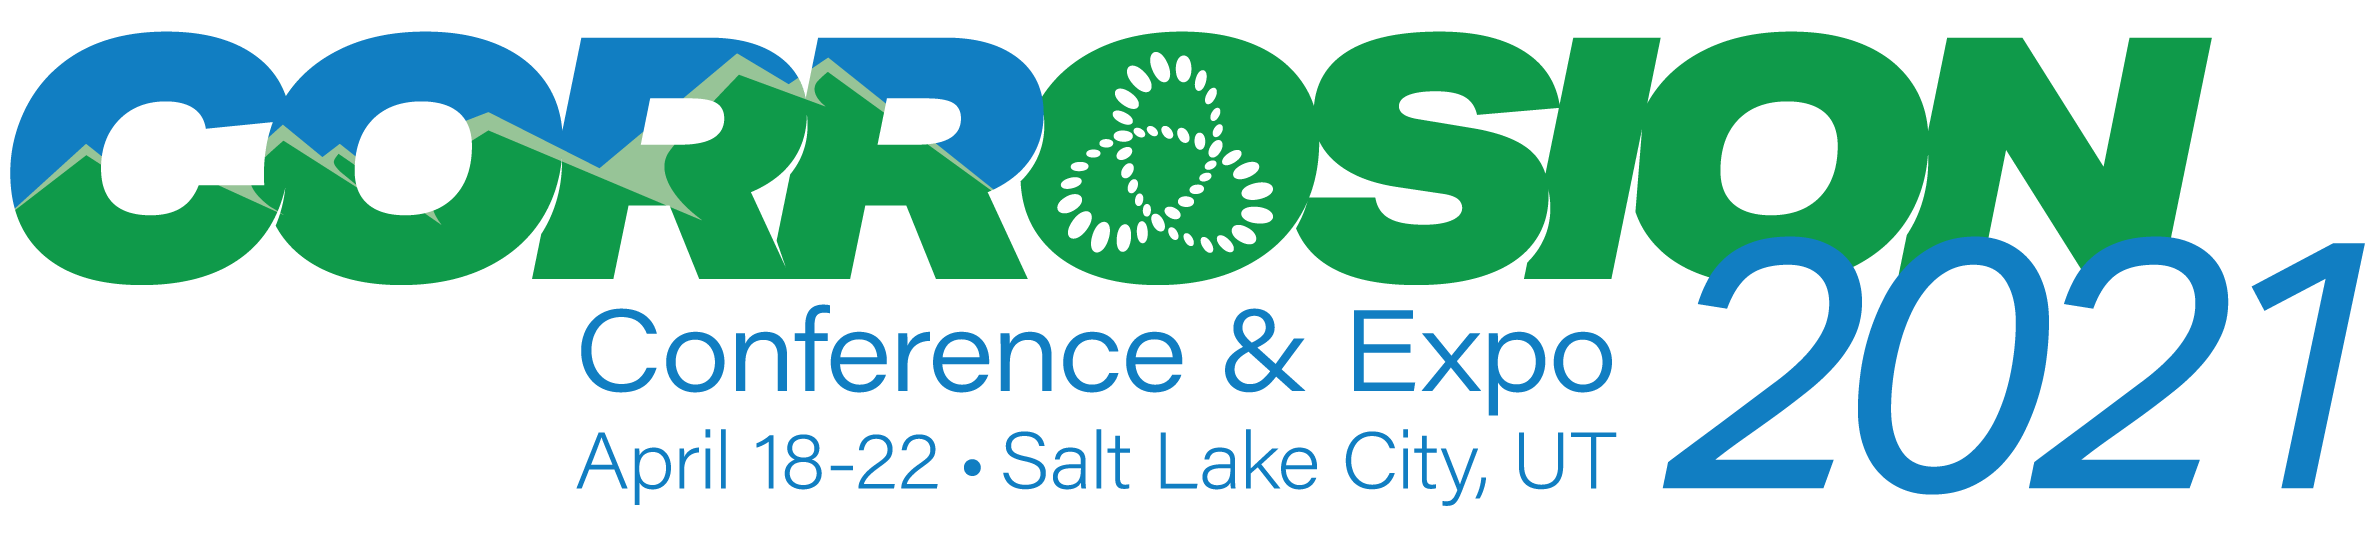 NACE - Corrosion 2021 Conference and Expo  Salt Lake City, UT; April 18-22, 2021